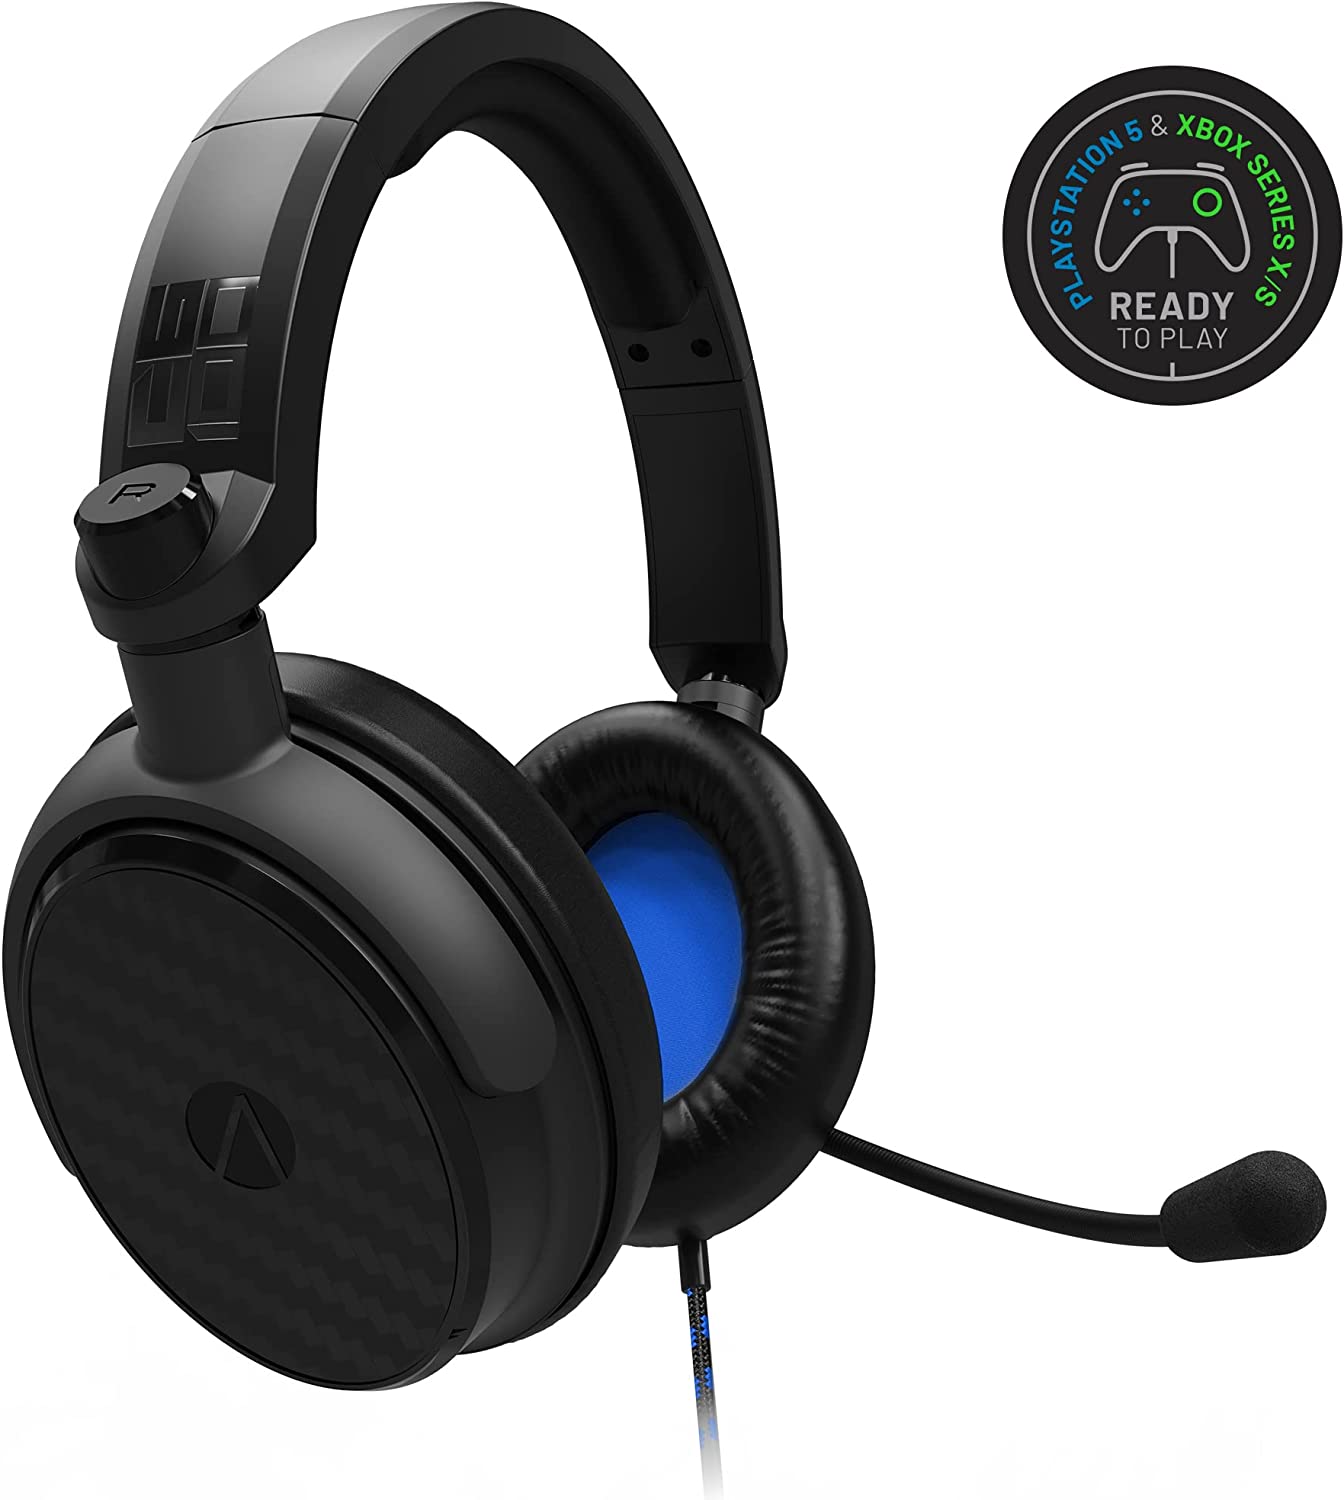 Stealth C6-100 Gaming Headset - Black/Blue